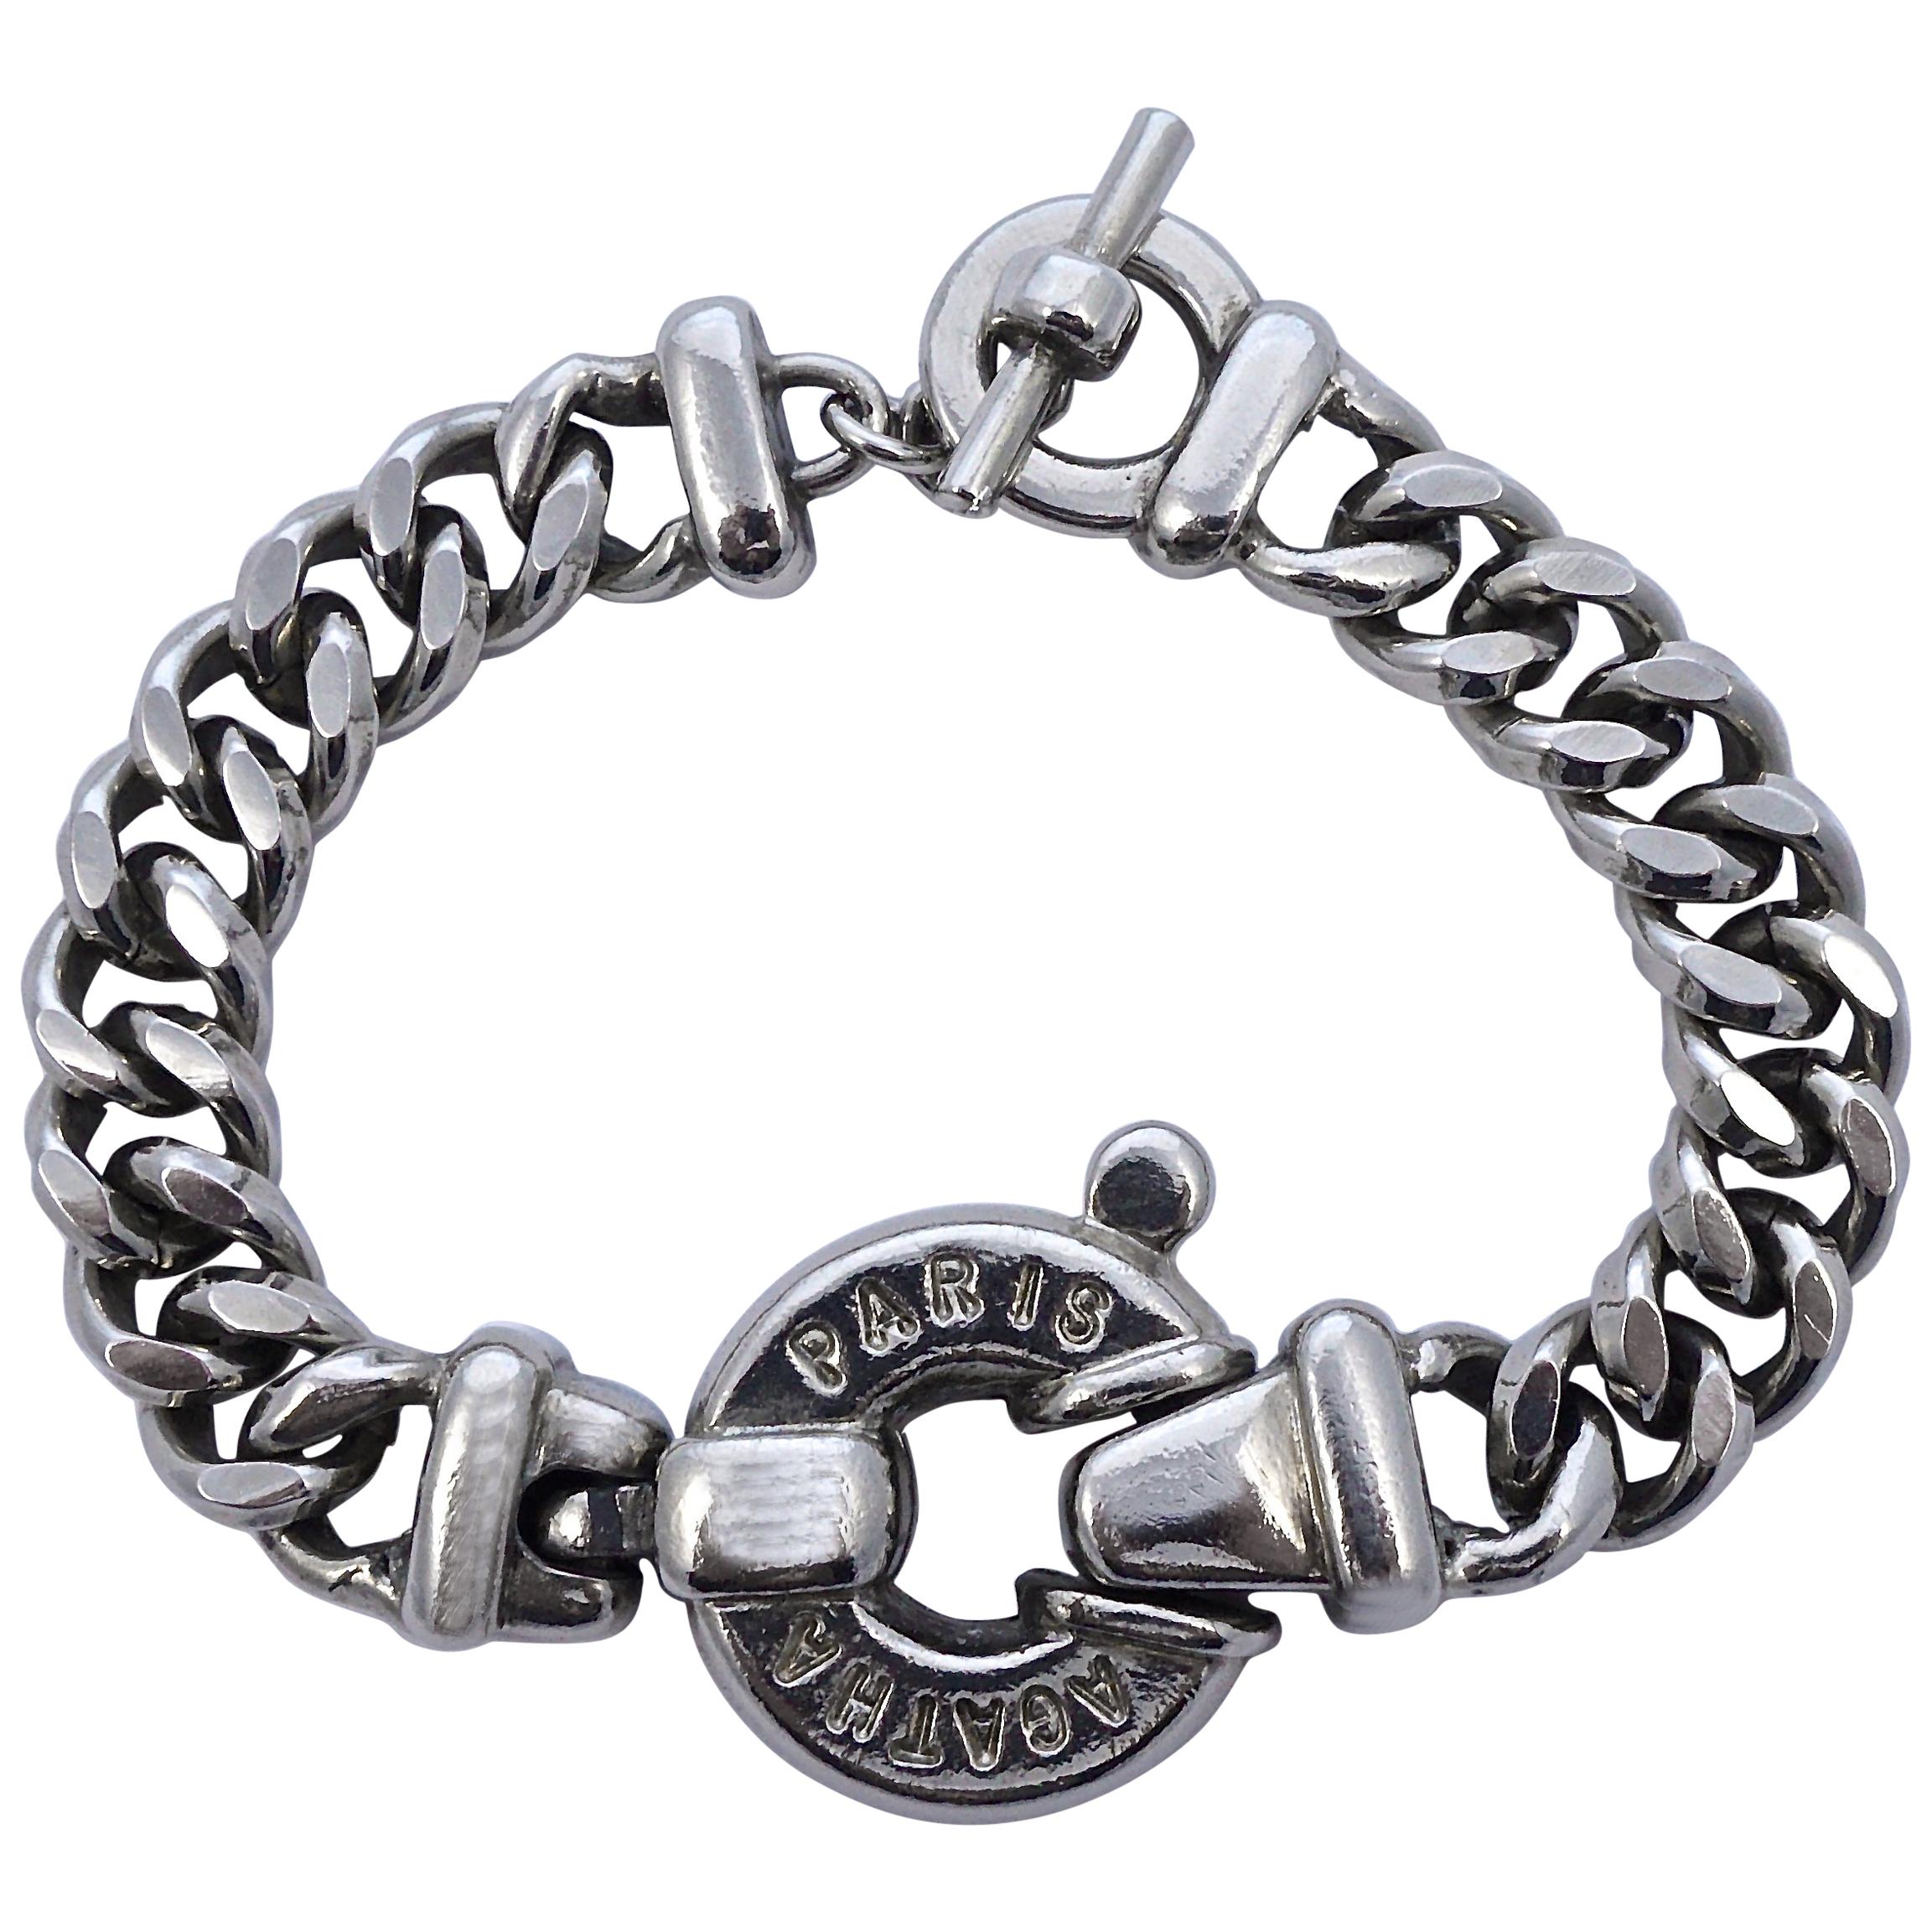 Agatha Paris Silver Tone Curb Link Chain Bracelet with Medallion